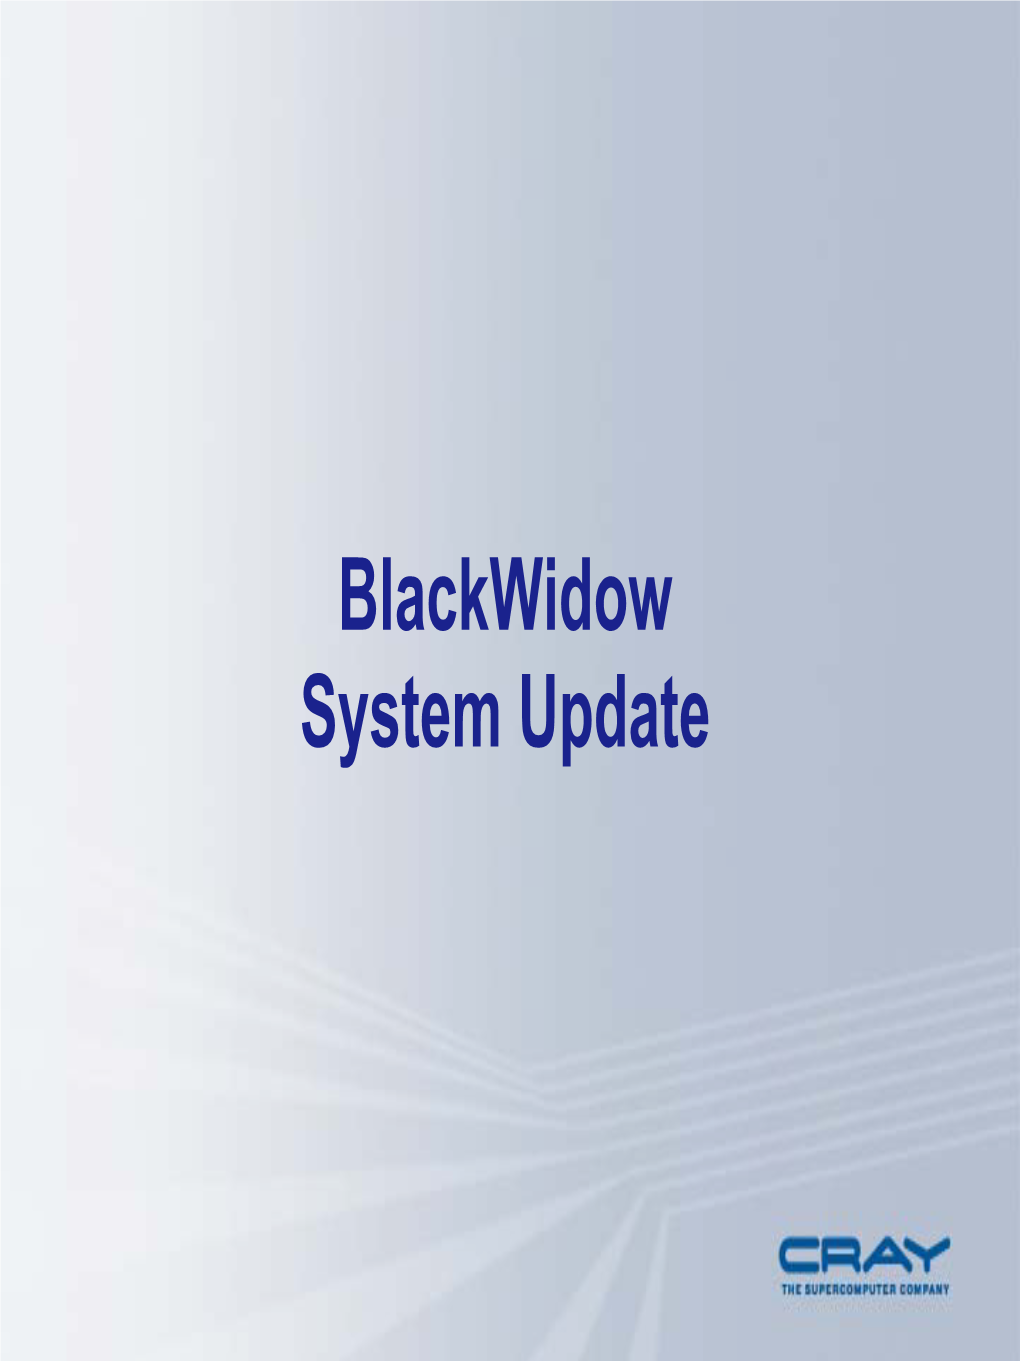 Blackwidow System Update Blackwidow ƒ System Update ƒ Performance Update ƒ Programming Environment ƒ Scalar & Vector Computing ƒ Roadmap